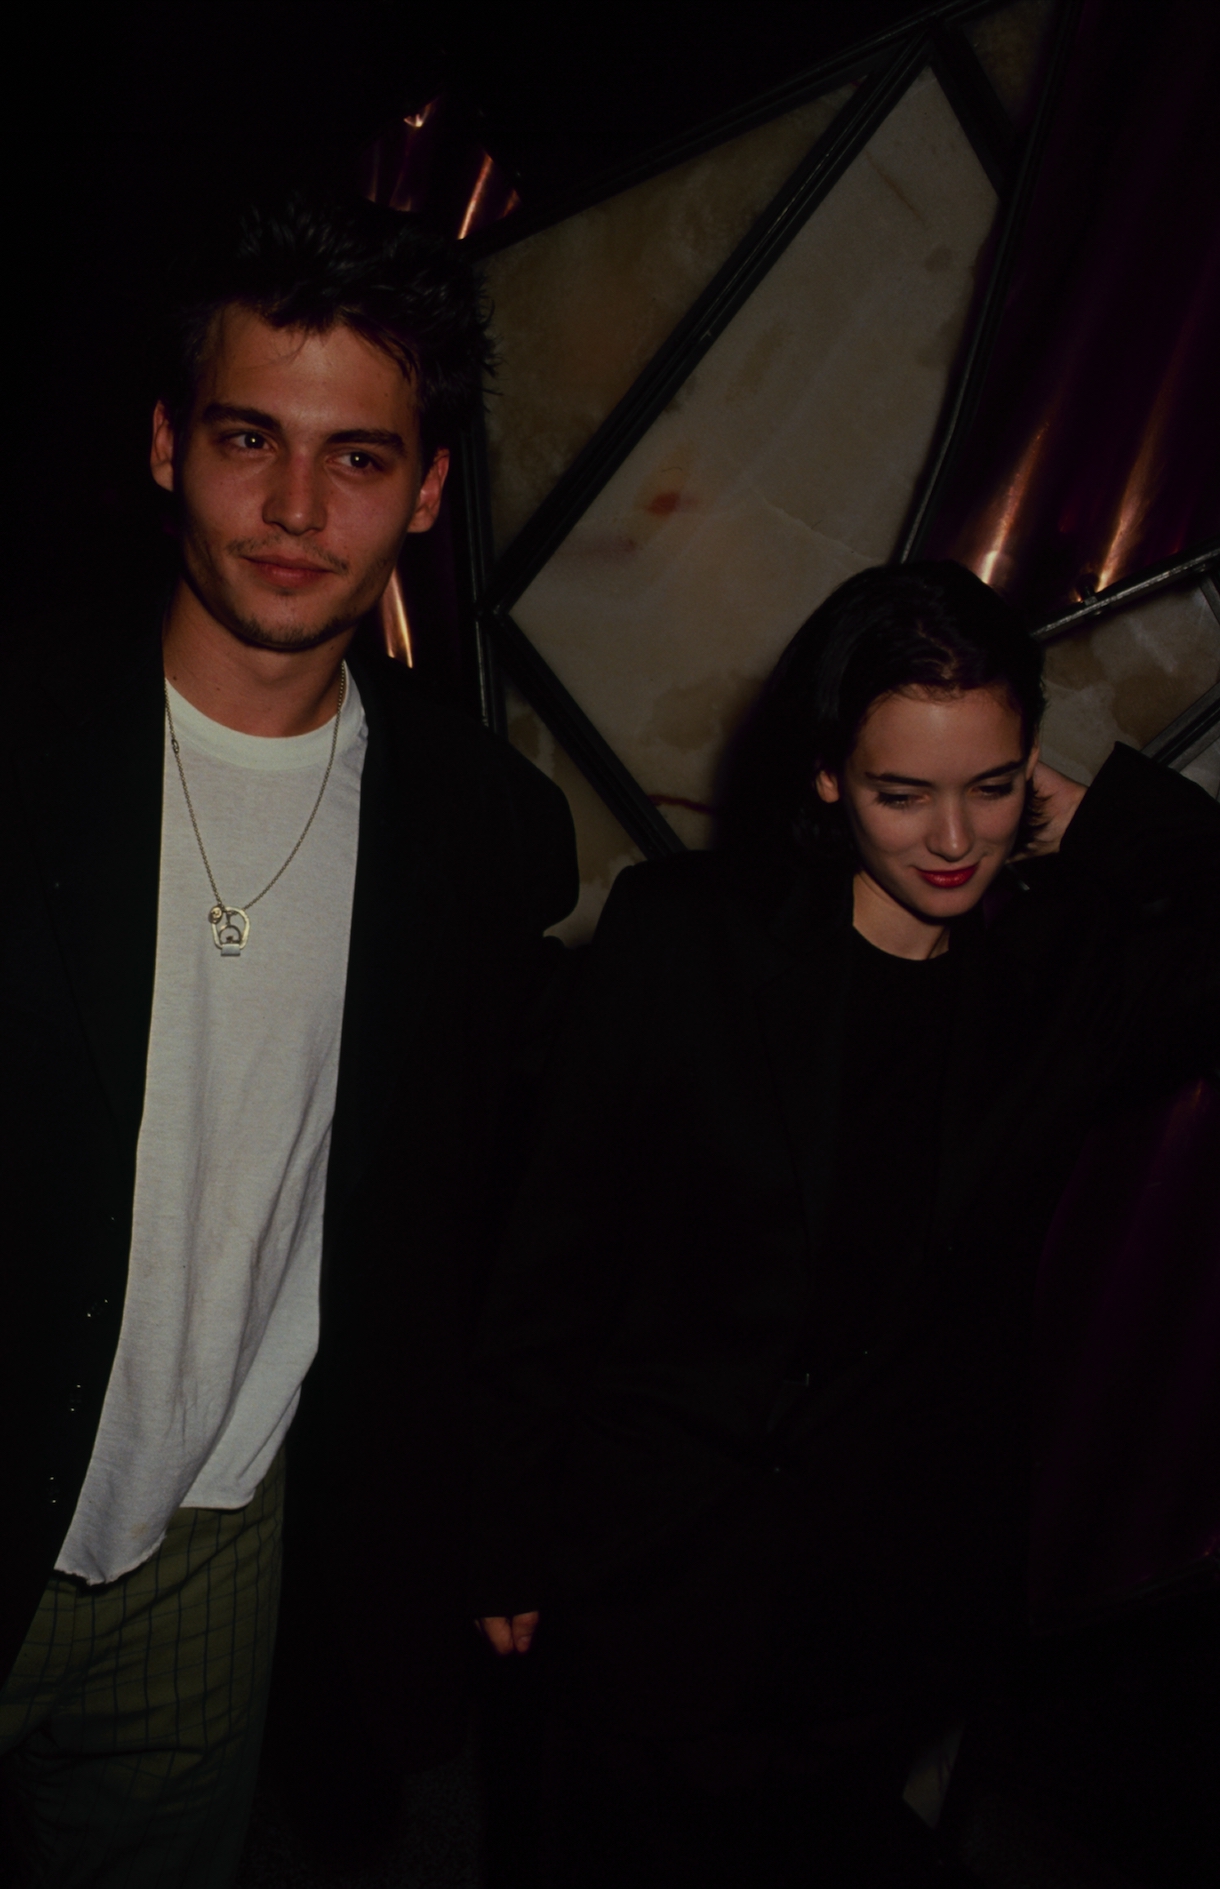 American actress Winona Ryder with her boyfriend, actor Johnny Depp, circa 1990